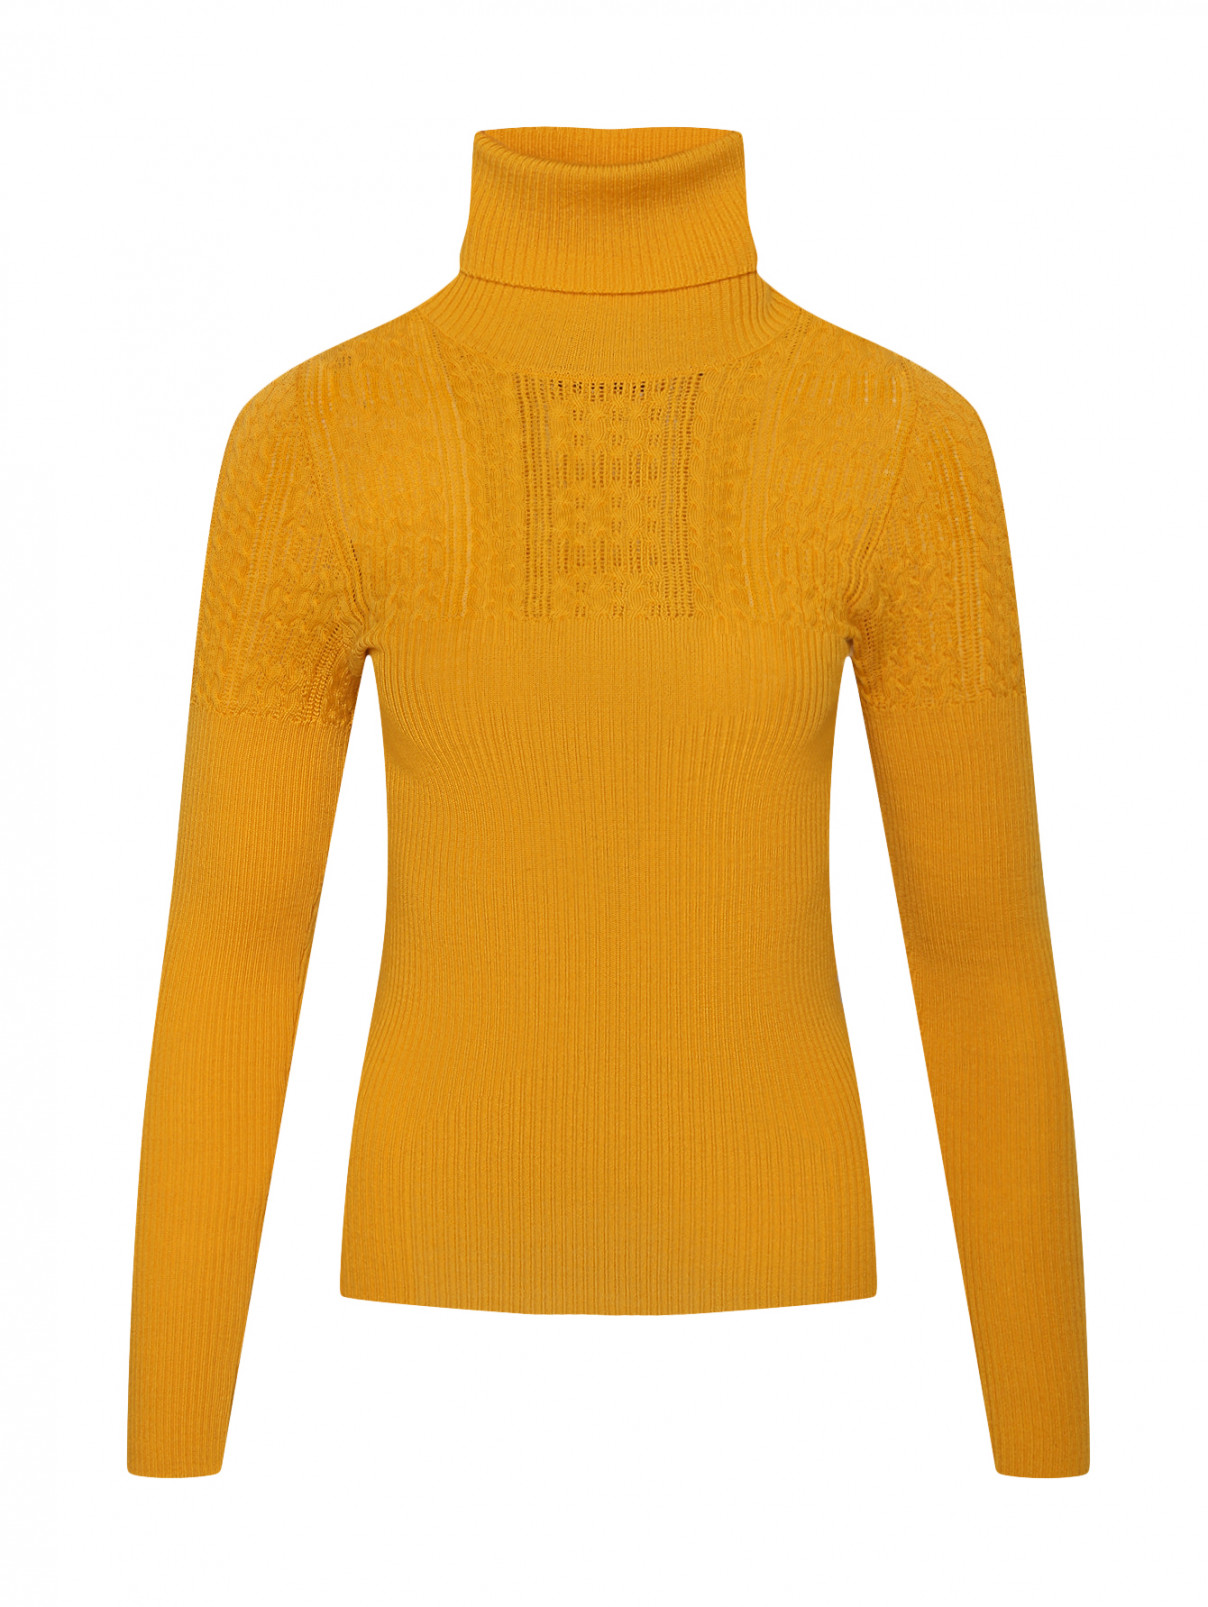 Водолазка из шерсти крупной вязки Moschino Boutique  –  Общий вид  – Цвет:  Желтый